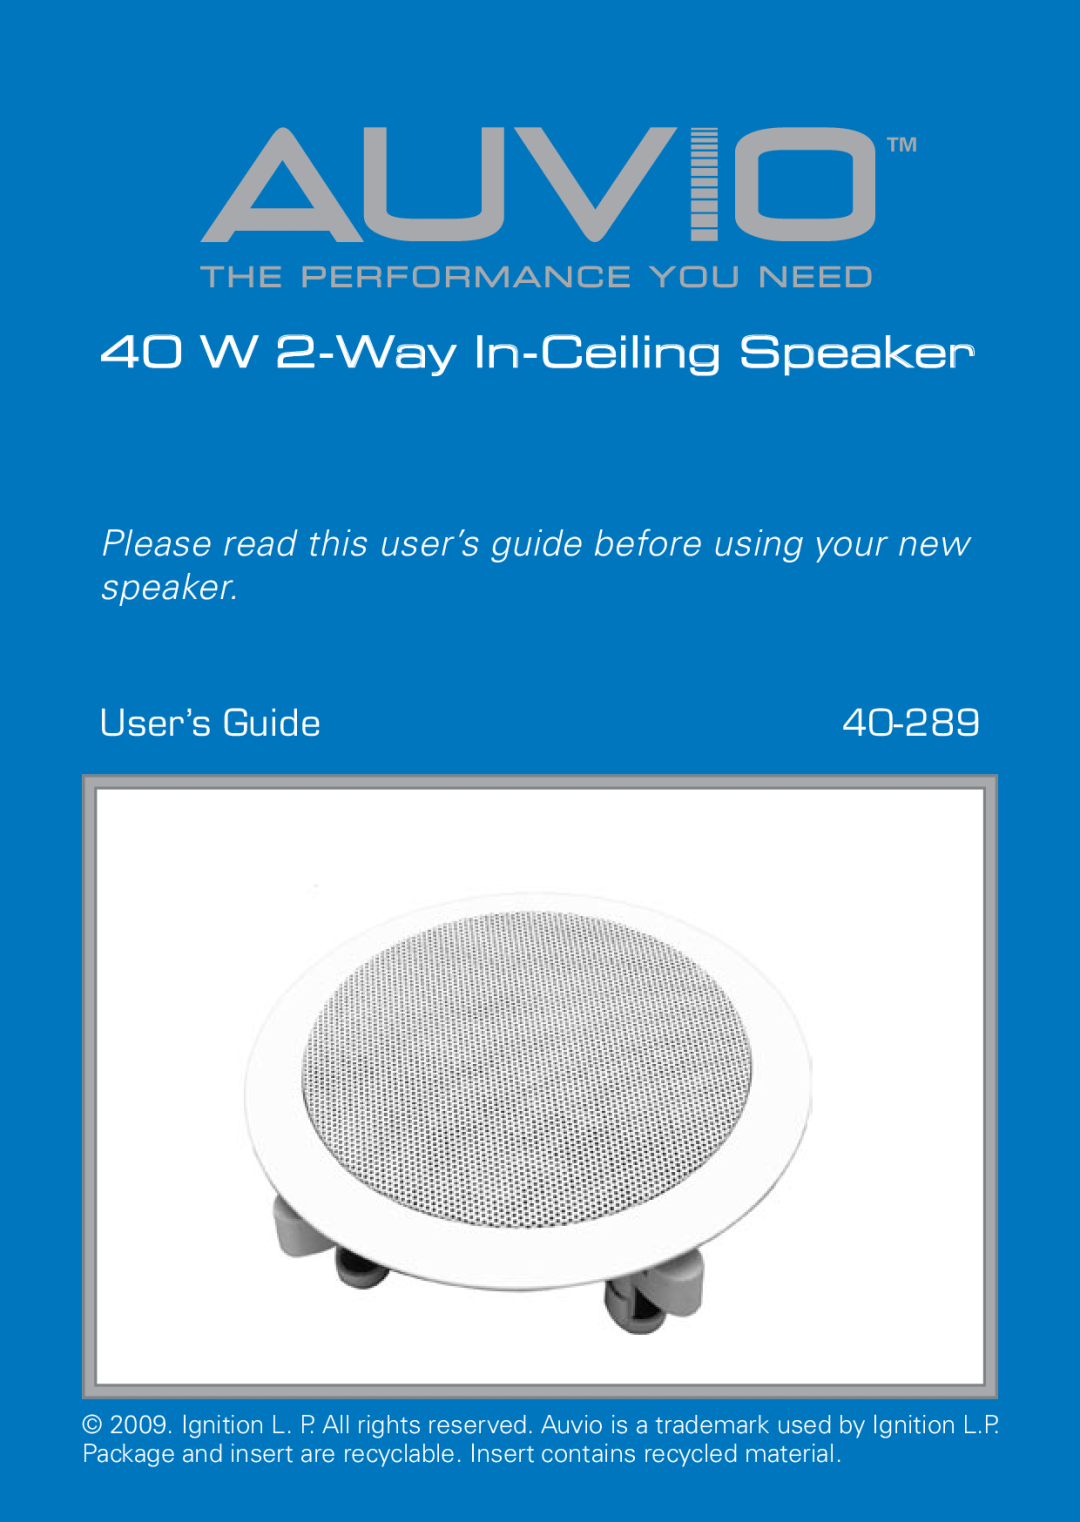 Radio Shack 40-289 manual 40 W 2-WayIn -CeilingSpeaker, User’s Guide, Theperformance You Need 